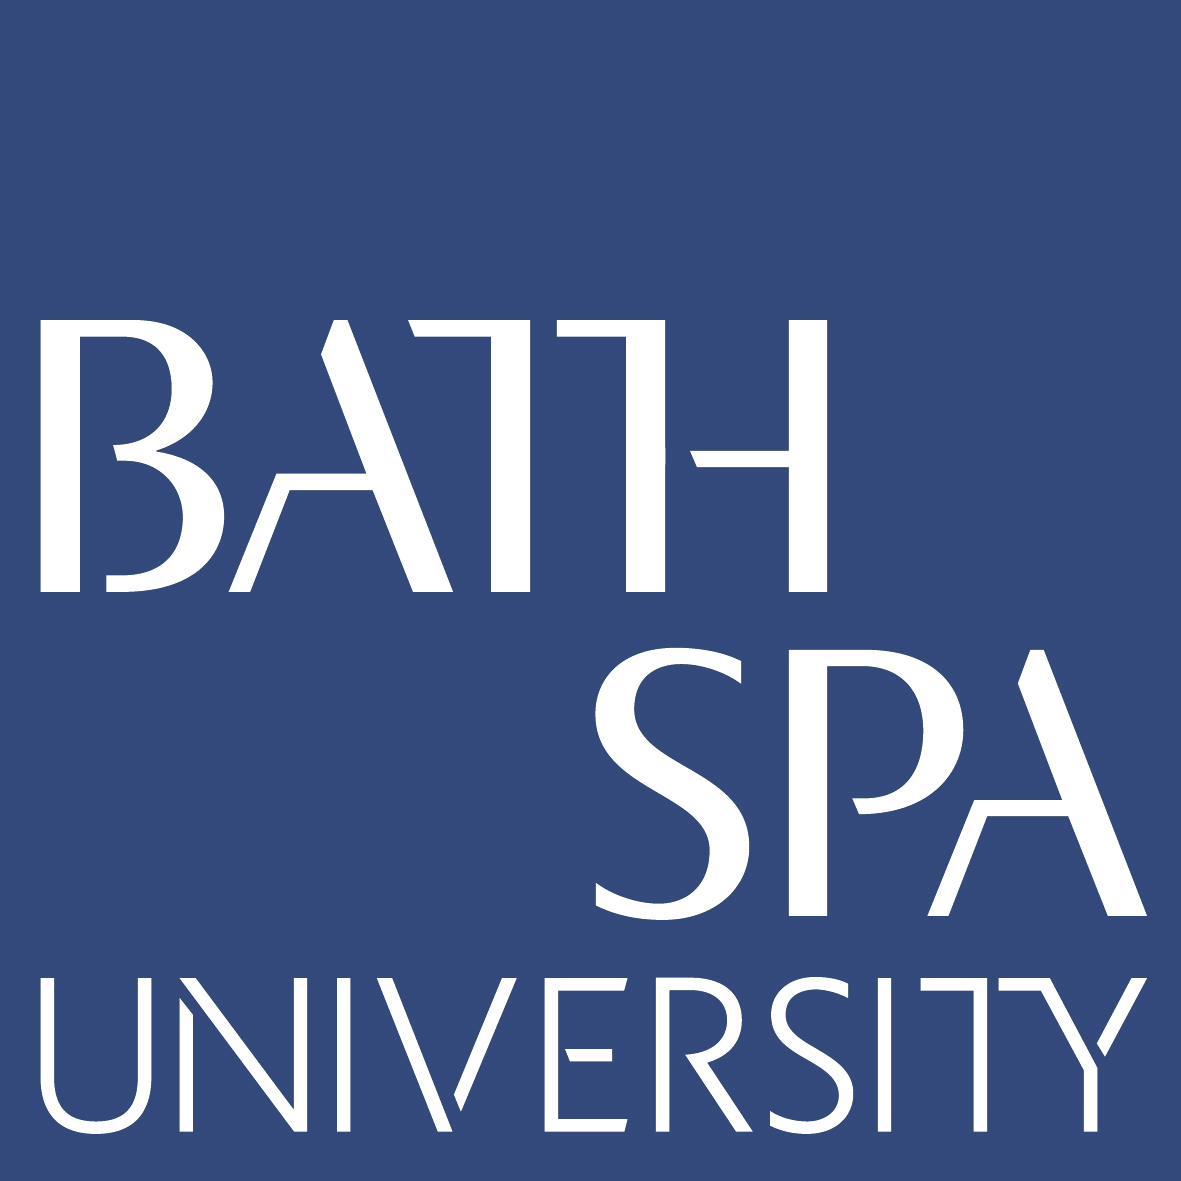 An image of Bath Spa University's logo